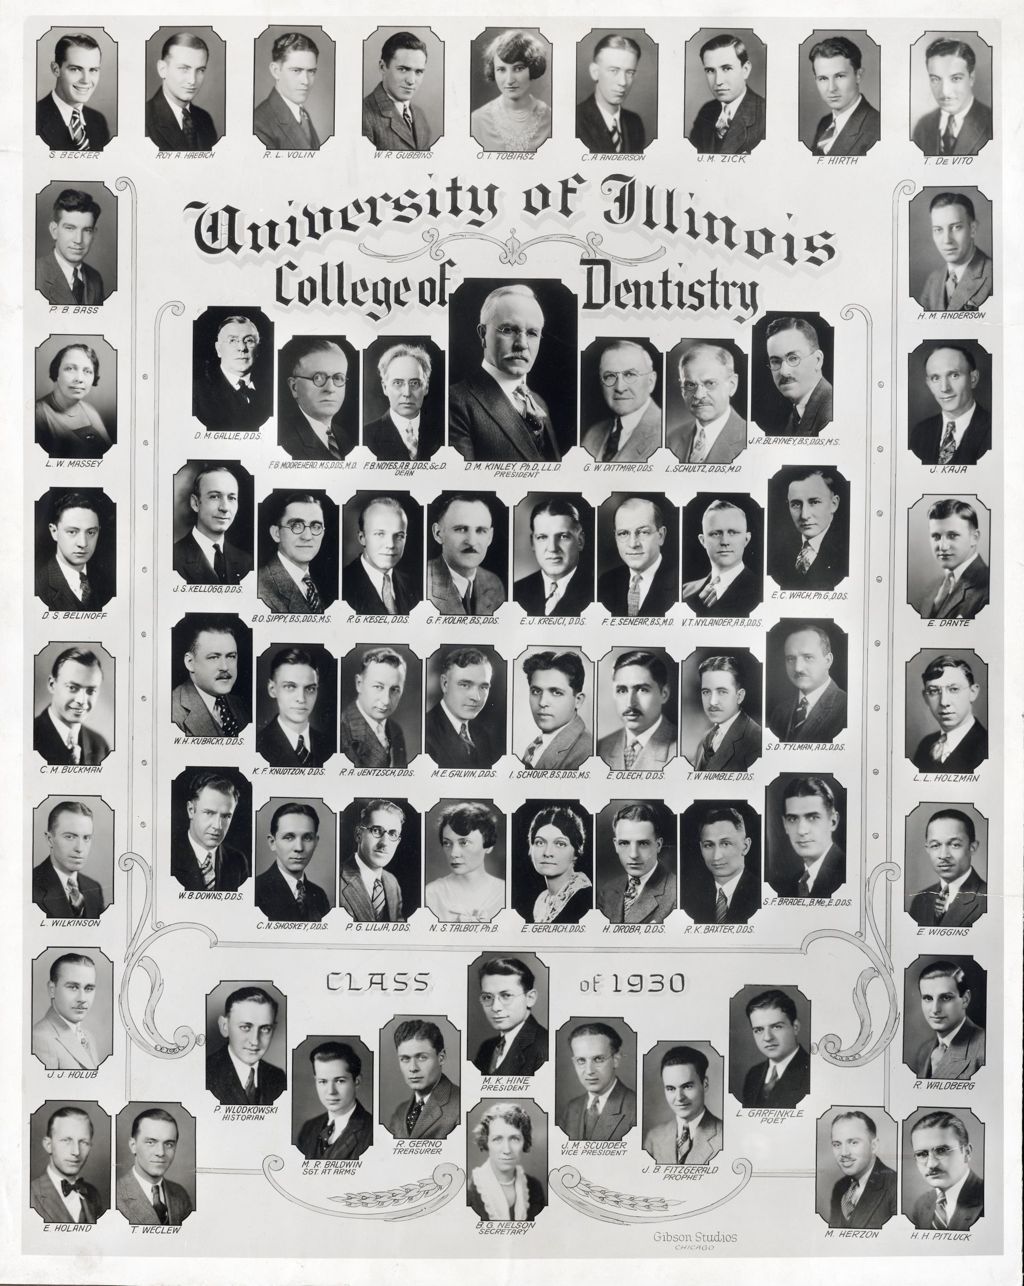 1930 graduating class, University of Illinois College of Dentistry